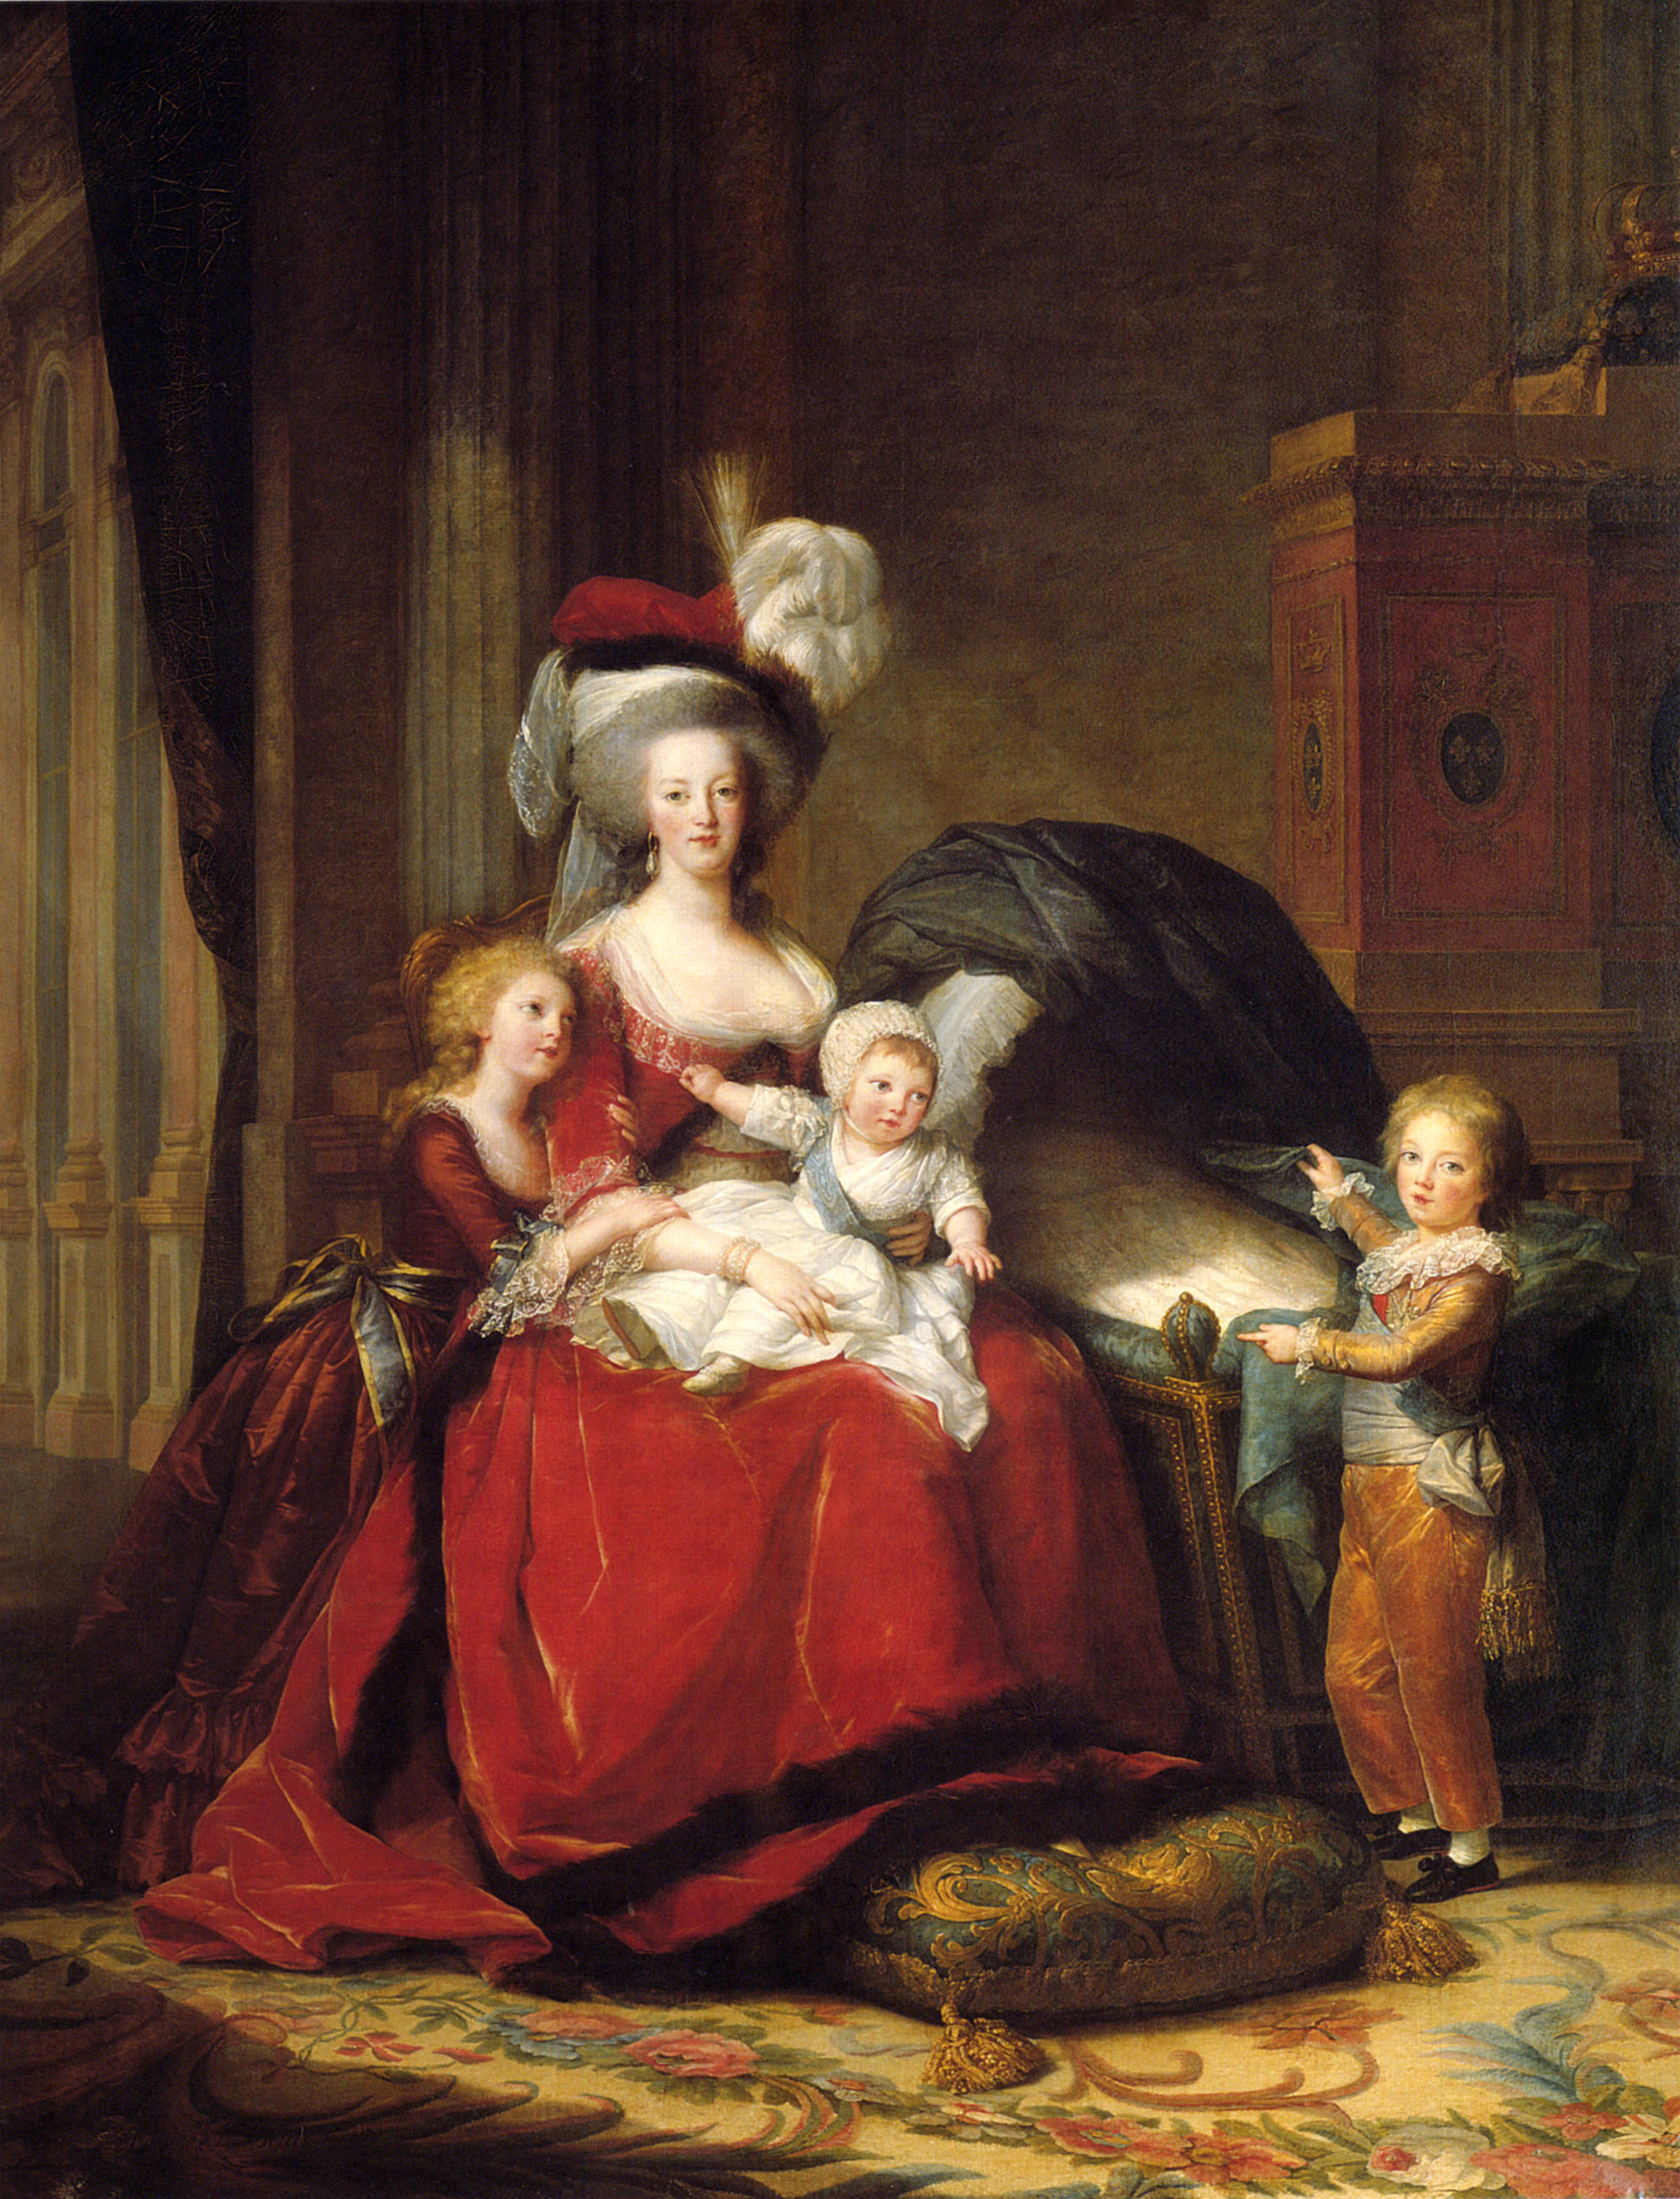 Elisabeth Vigée Lebrun, Marie Antoinette and Her Children, 1787, oil on canvas, Palace of Versailles